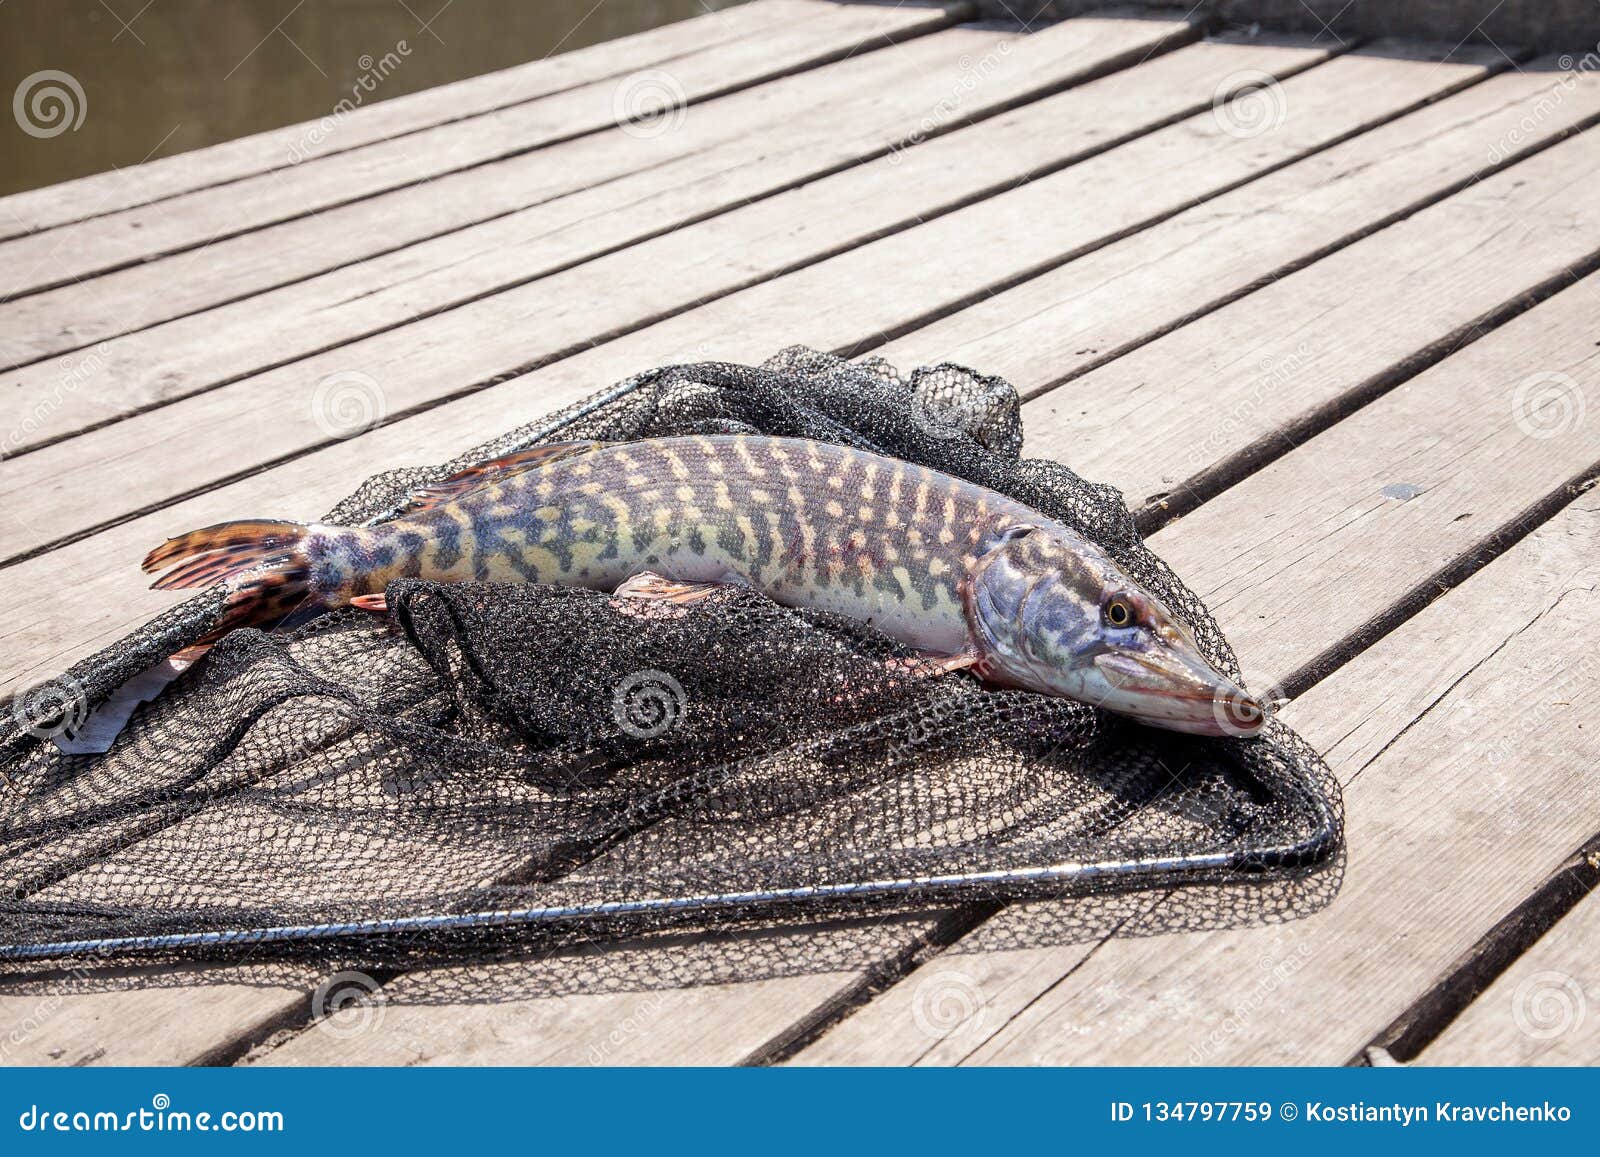 Trophy Fishing. Big Freshwater Pike Lies on Black Fishing Net Stock Image -  Image of pike, activity: 134797759